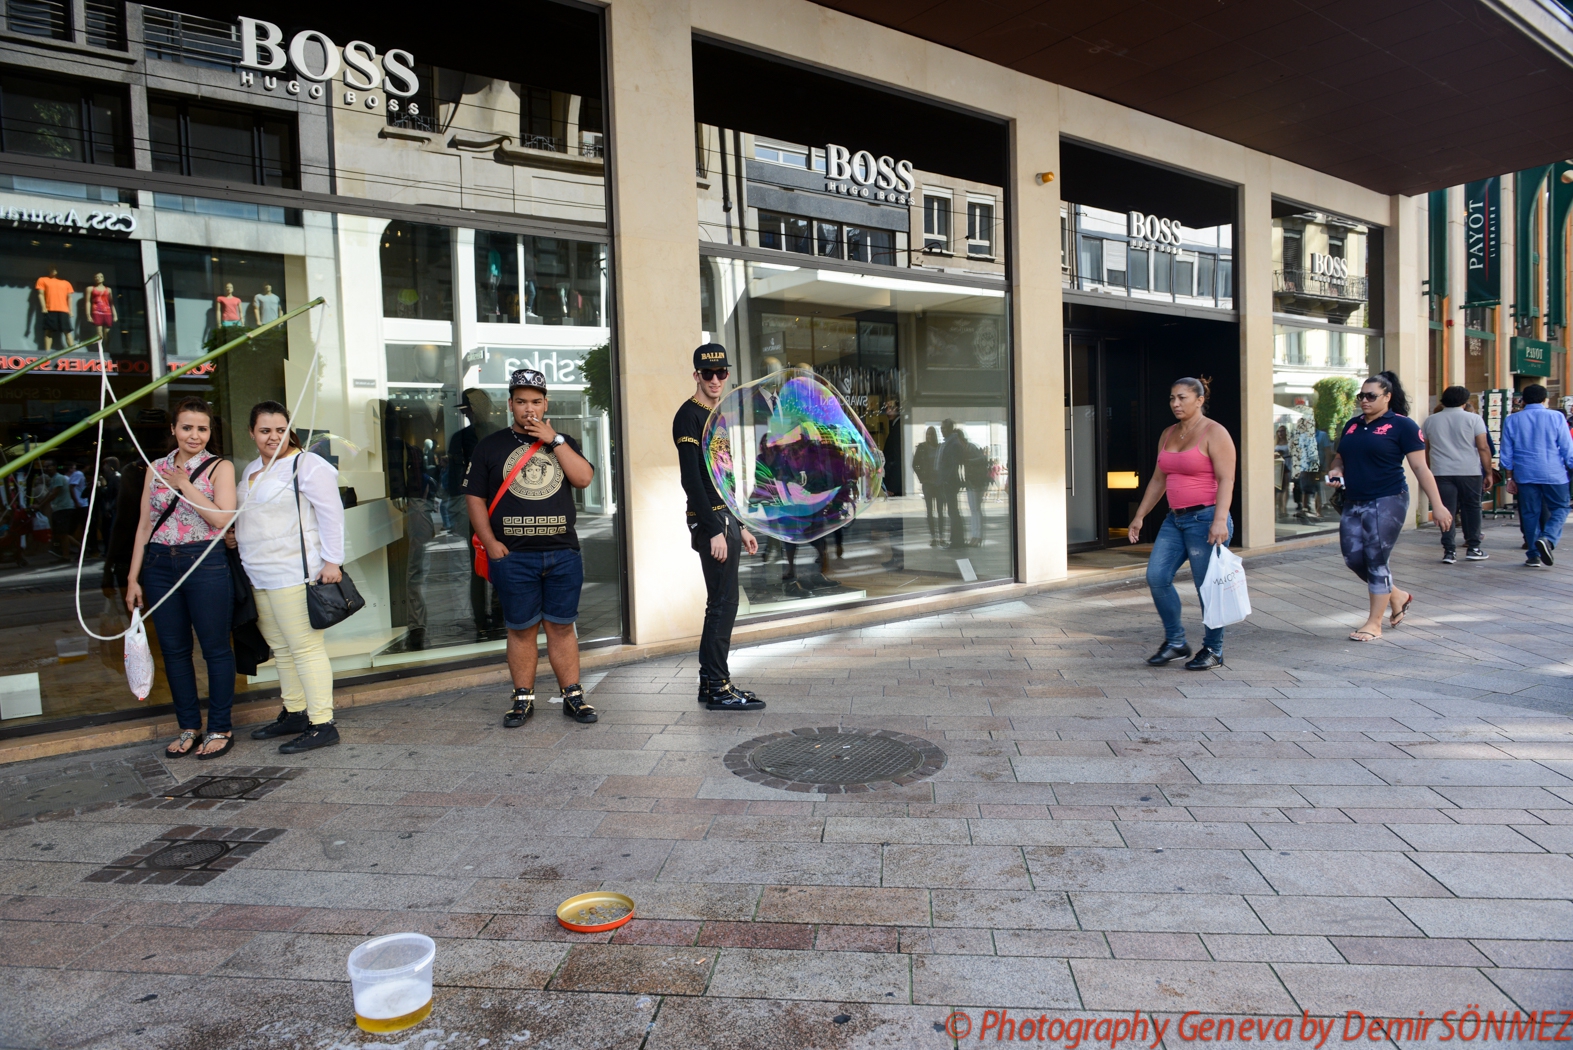 Les bulles  de savon dans  les rues basses-0042.jpg